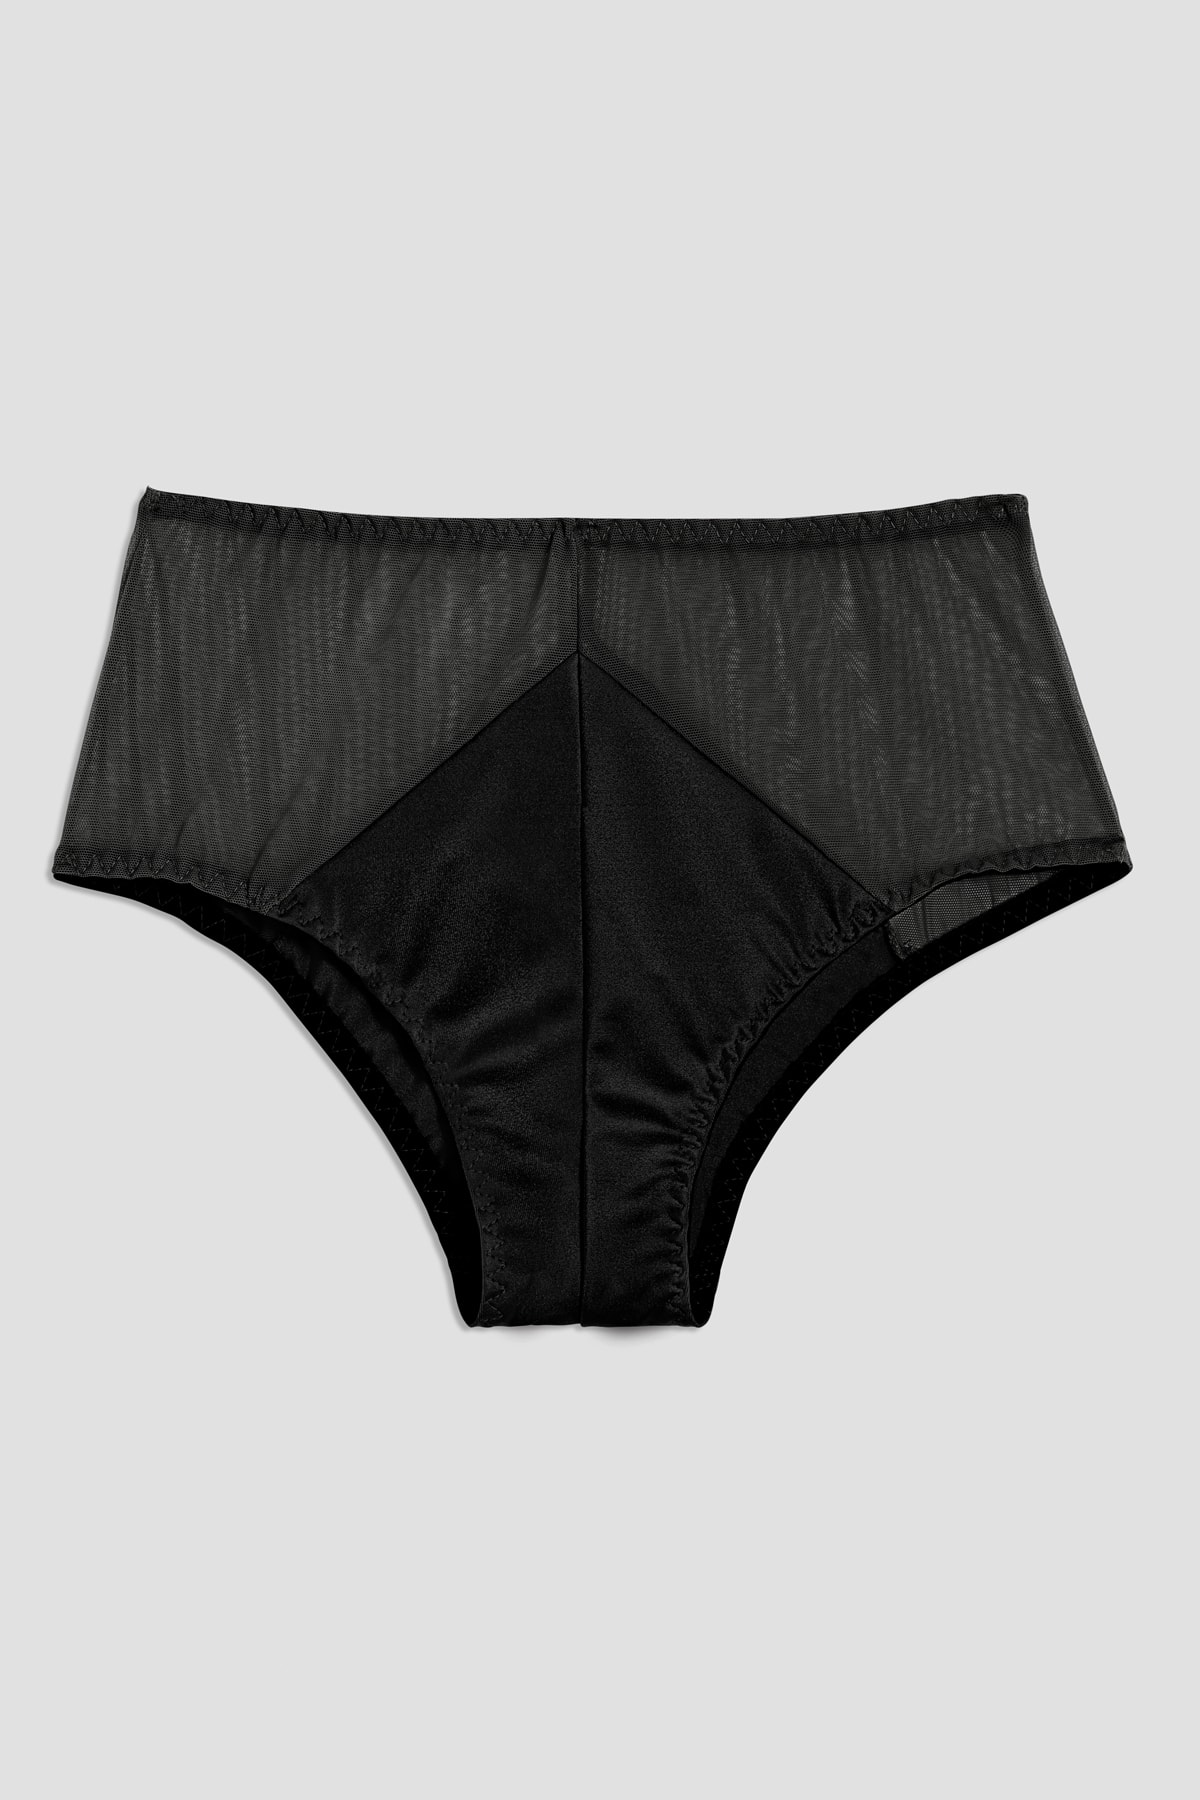 Frank and Oak Sokoloff Lingerie Underwear Black Brief